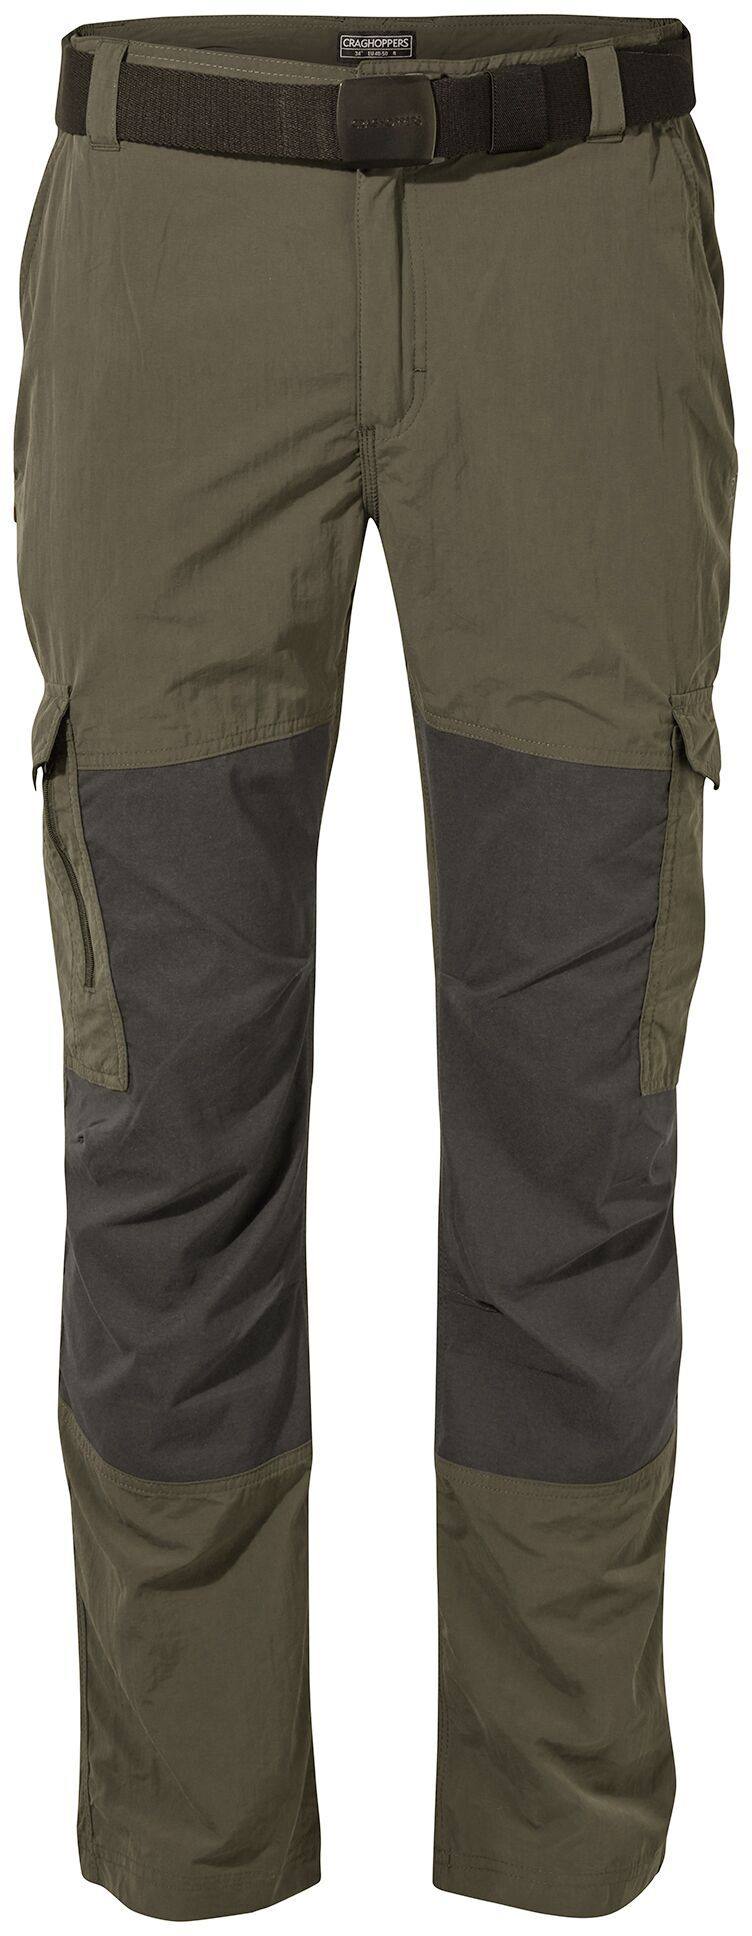 Craghoppers Nosilife Adventure Pro Short Trousers